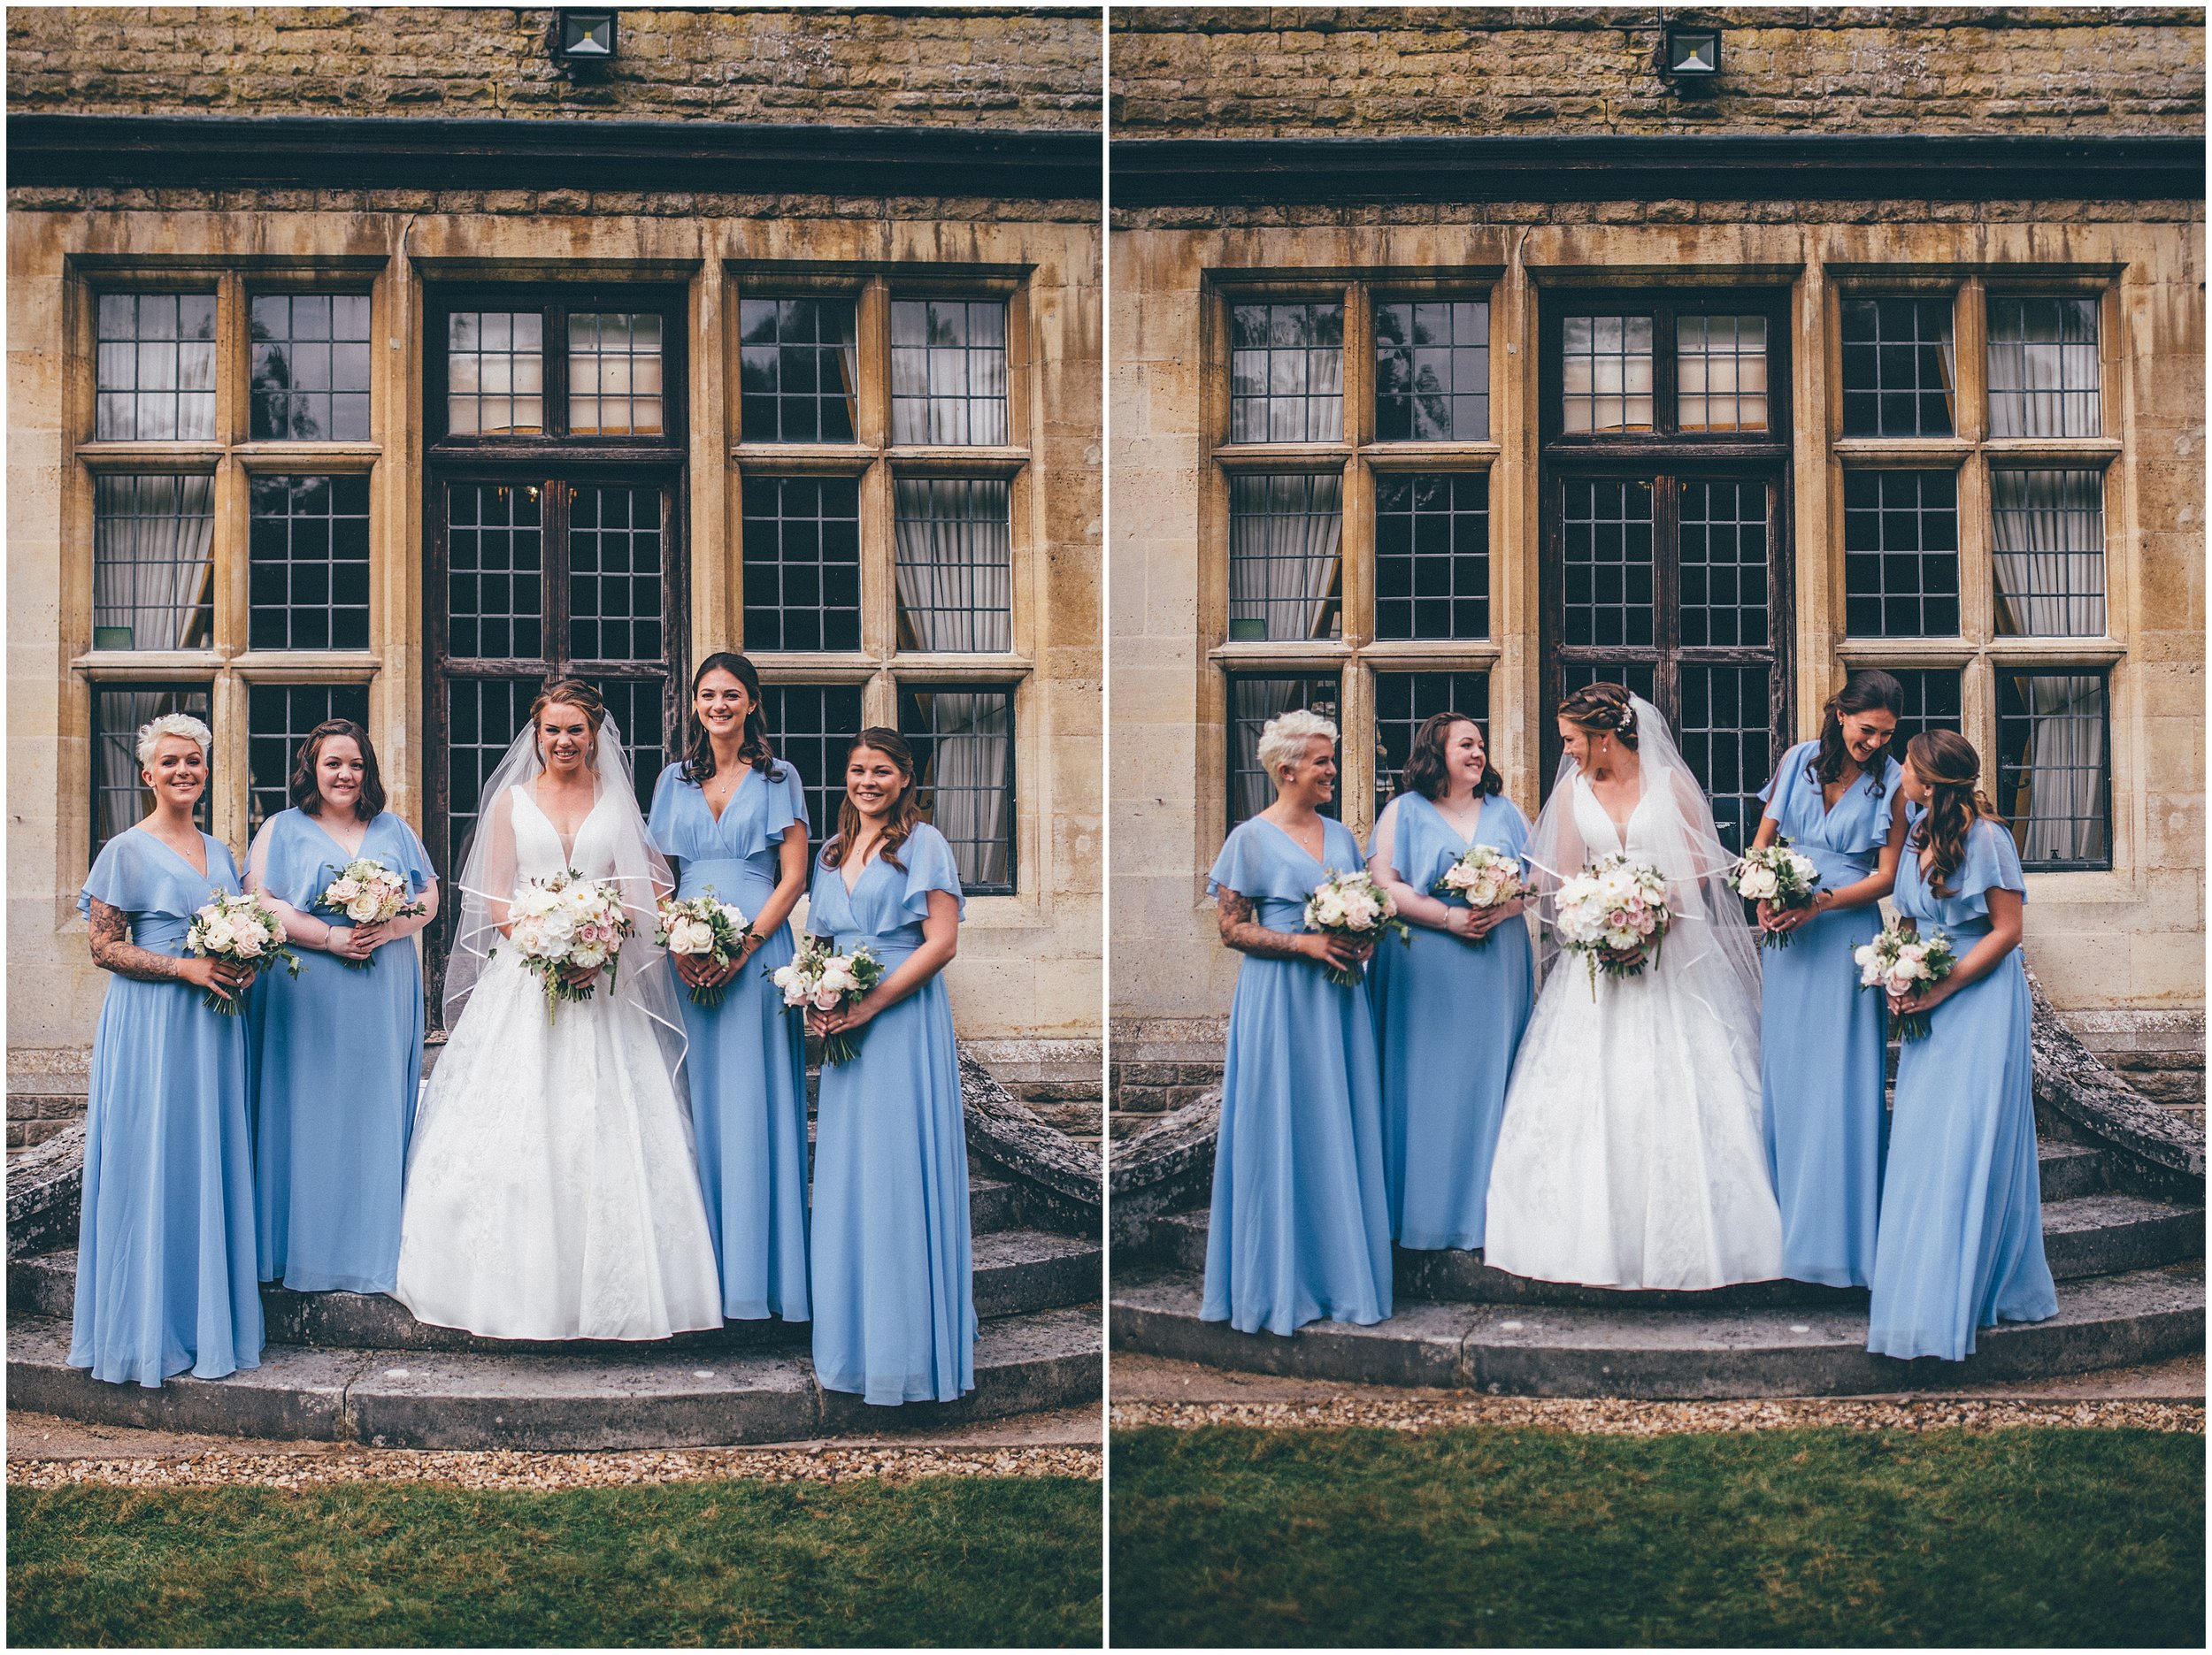 Stunning bride and her bridesmaids in cornflower blue dresses at Ashton Estate.